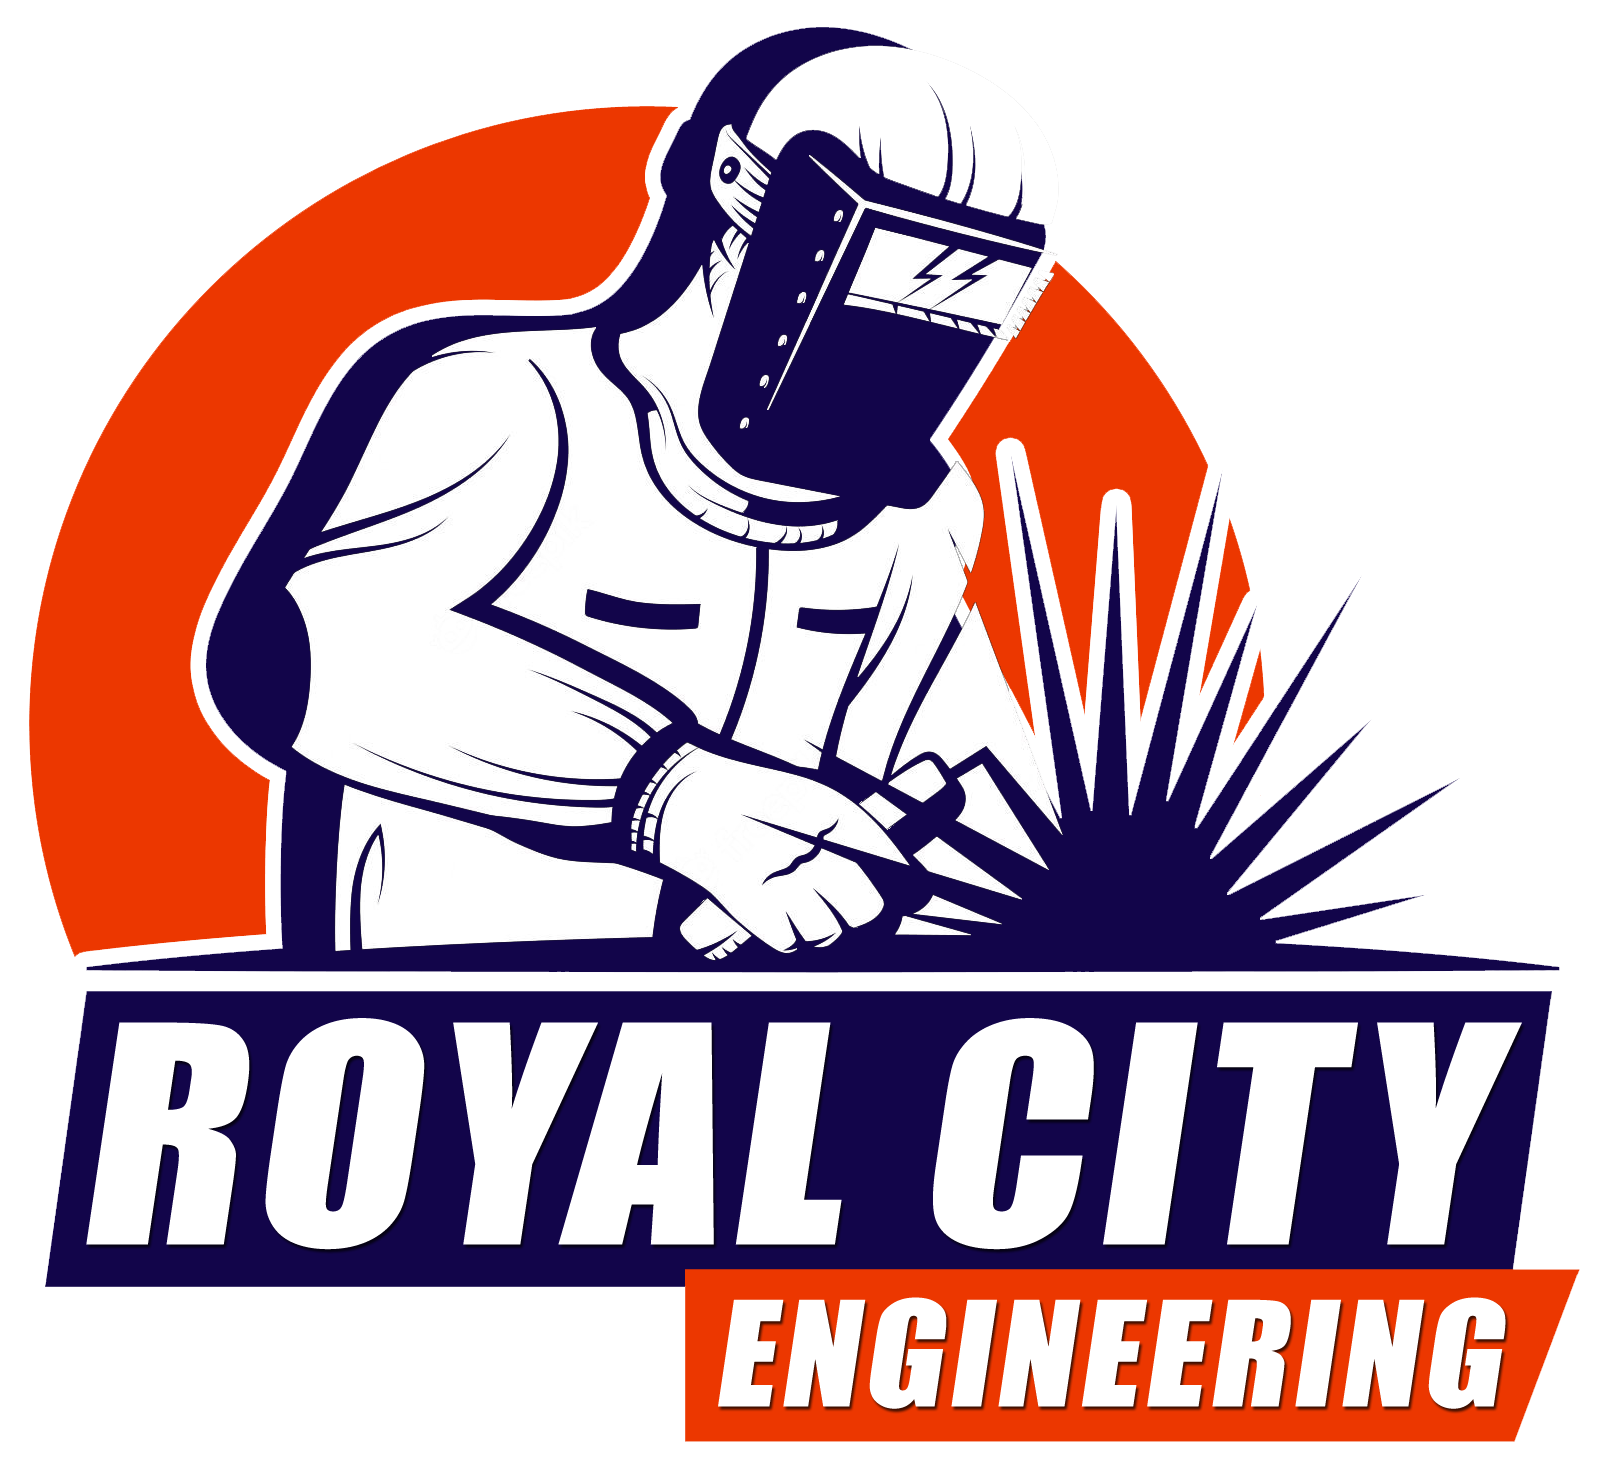 Royal City Engineering